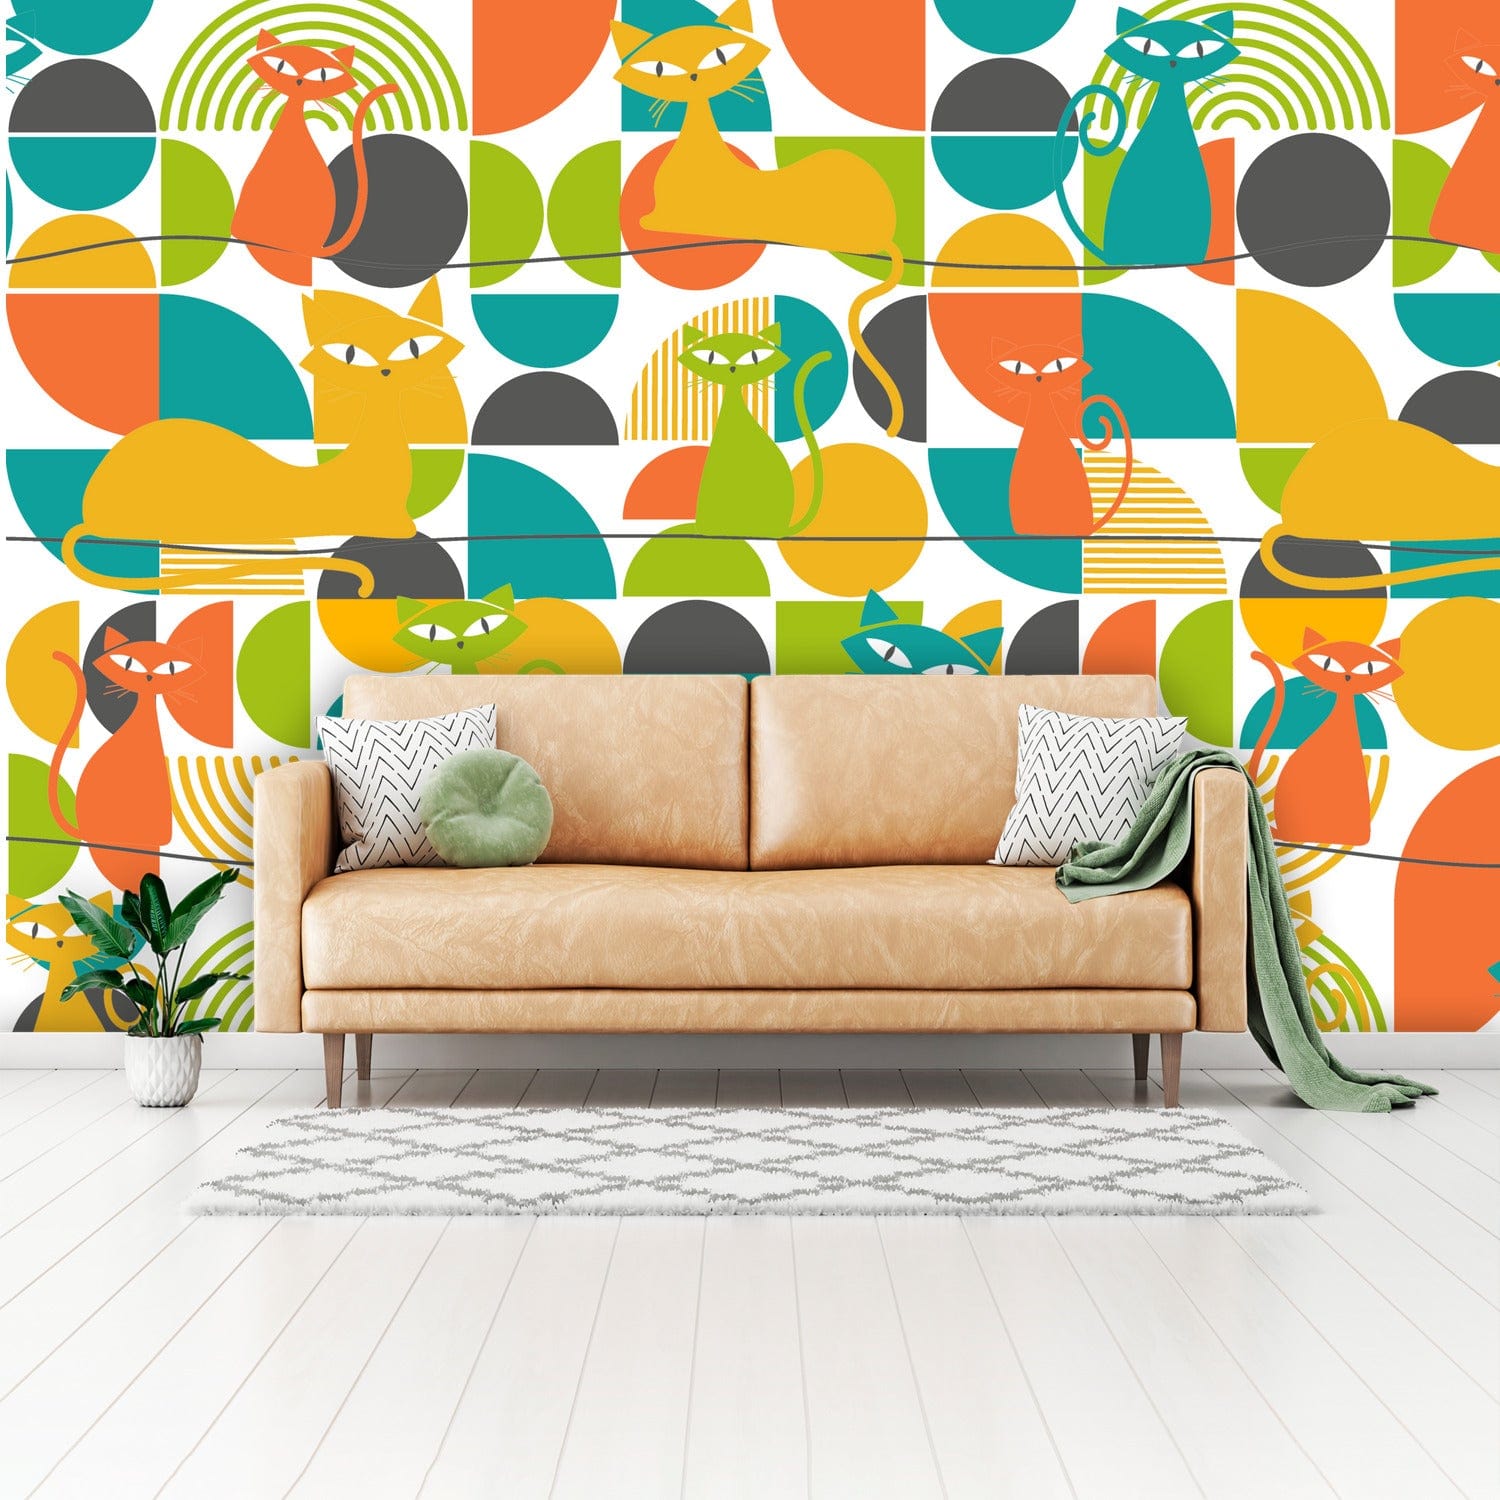 Mid Century Modern Wallpaper, Atomic Kitties, Geometric, Bold, Colorful, Orange, Teal, Yellow, Funky Fun, Kitsch Retro, Wall Murals Wallpaper